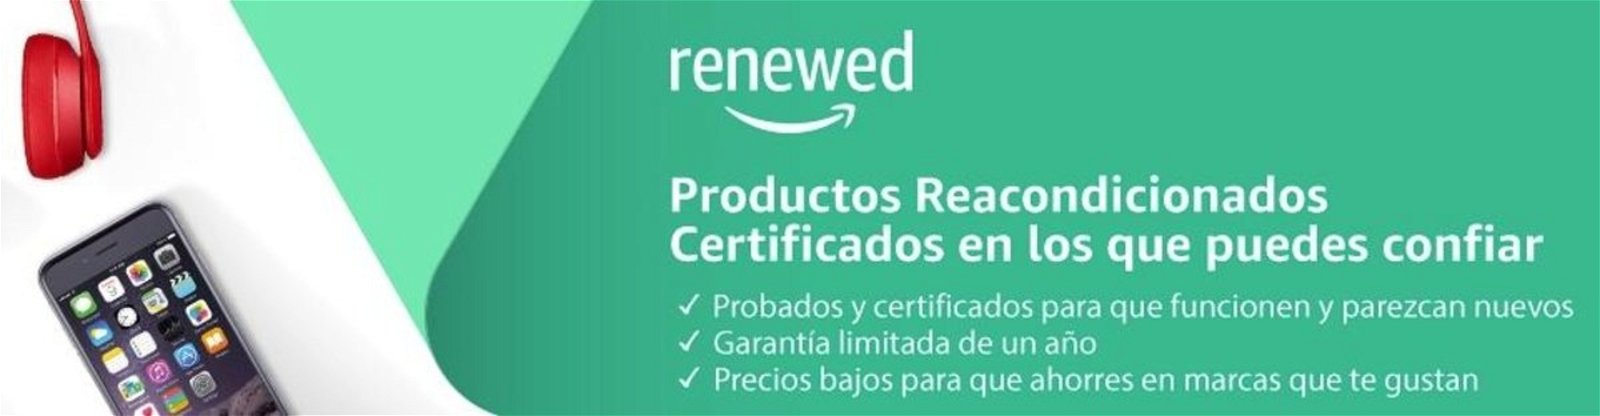 Amazon reacondicionados certificados